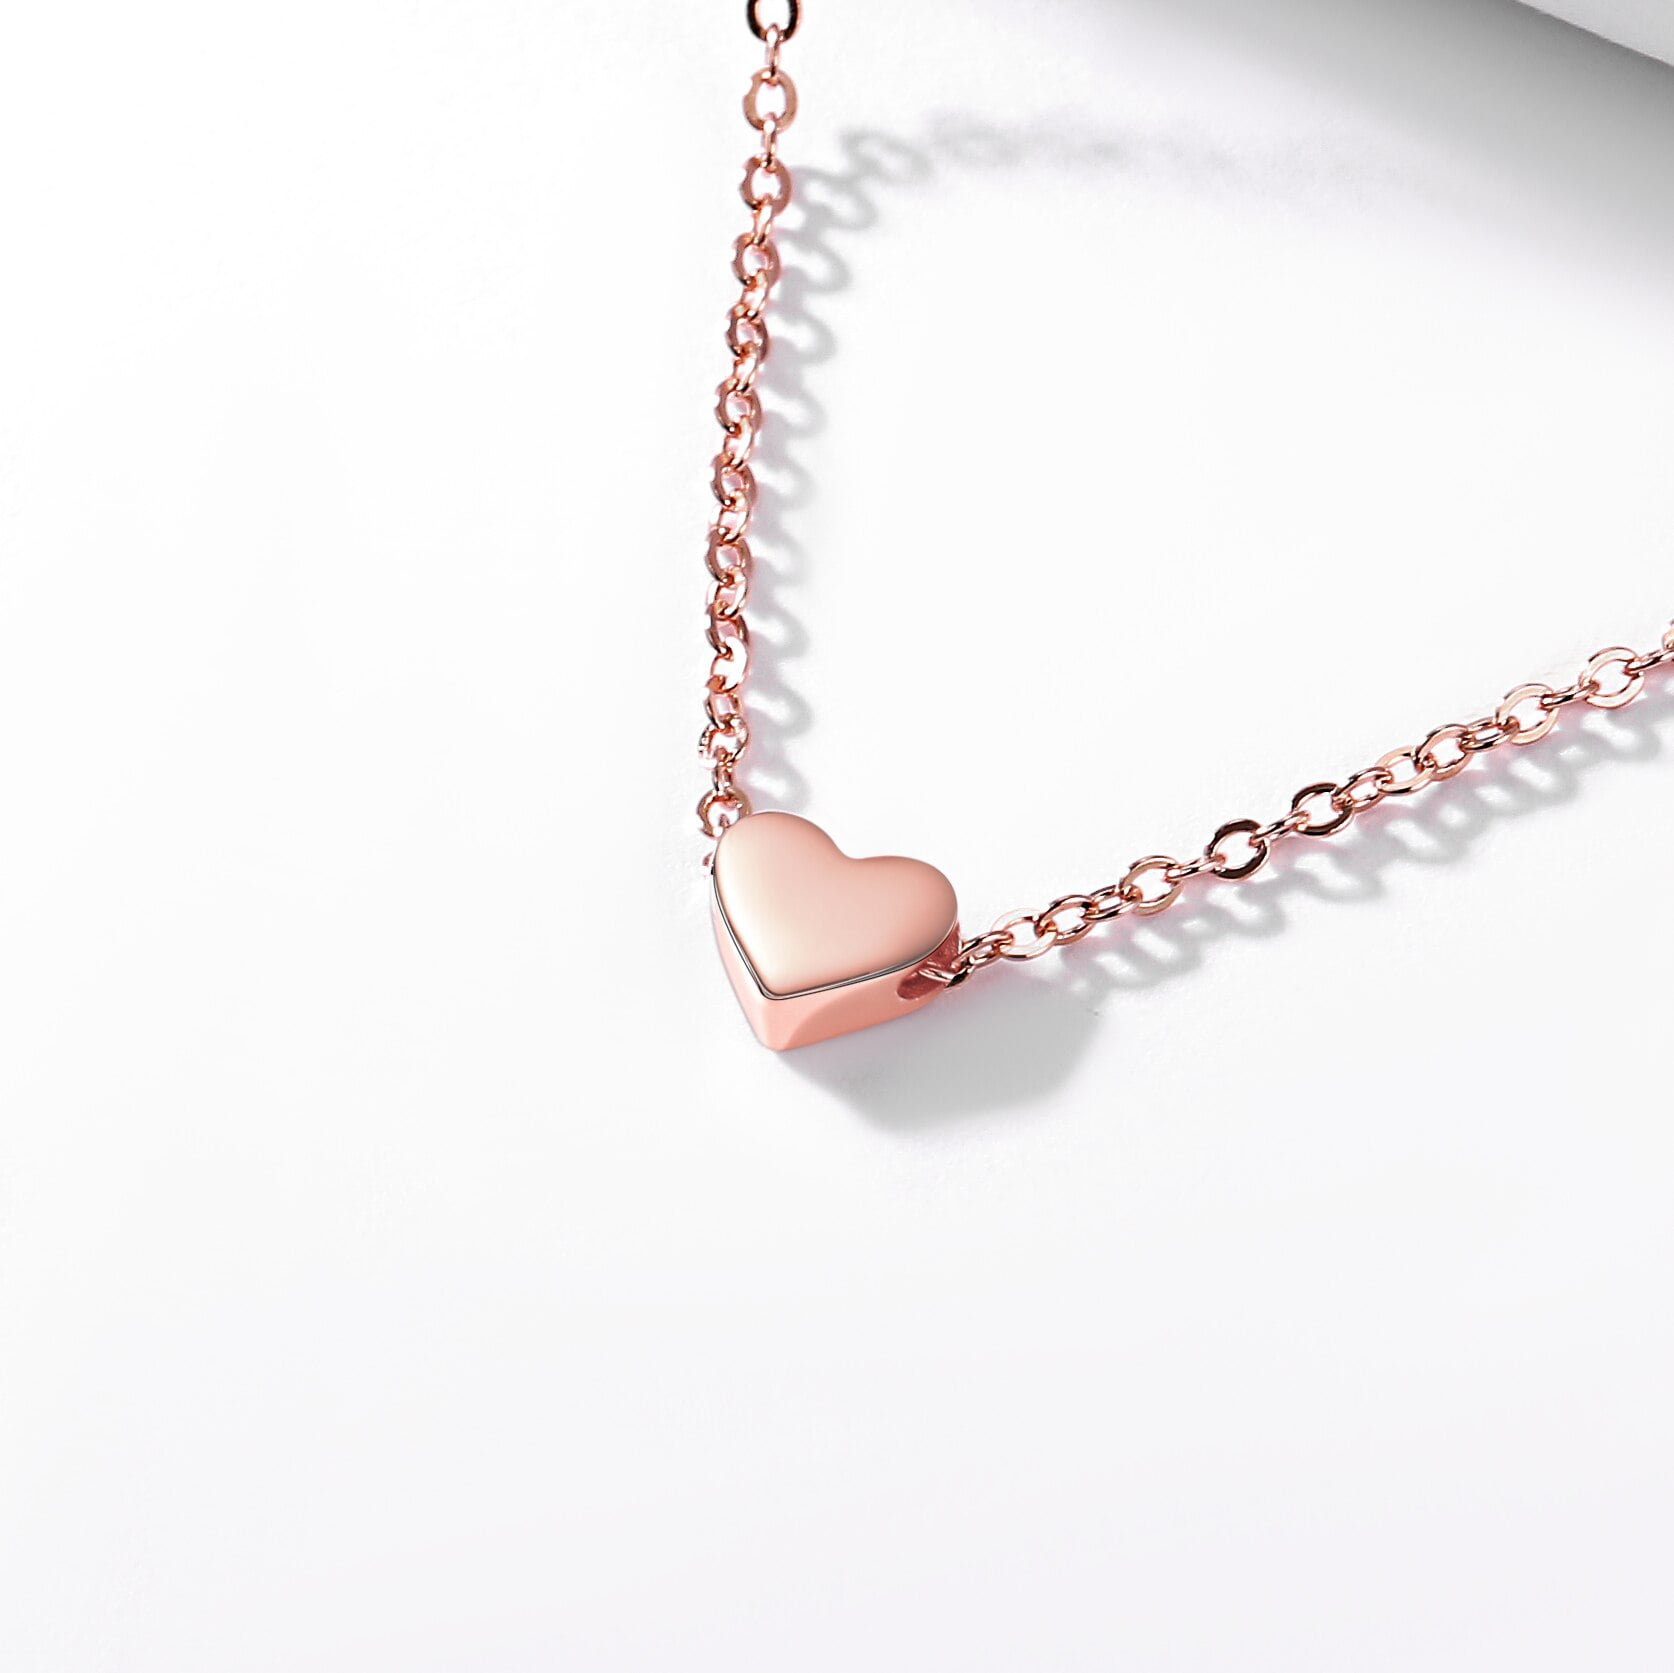 Heart Charms (6pcs) (10mm x 14mm / Tibetan Silver) Metal Finding Pendant Bracelet Earrings Zipper Pulls Bookmarks Key Chains CHM195